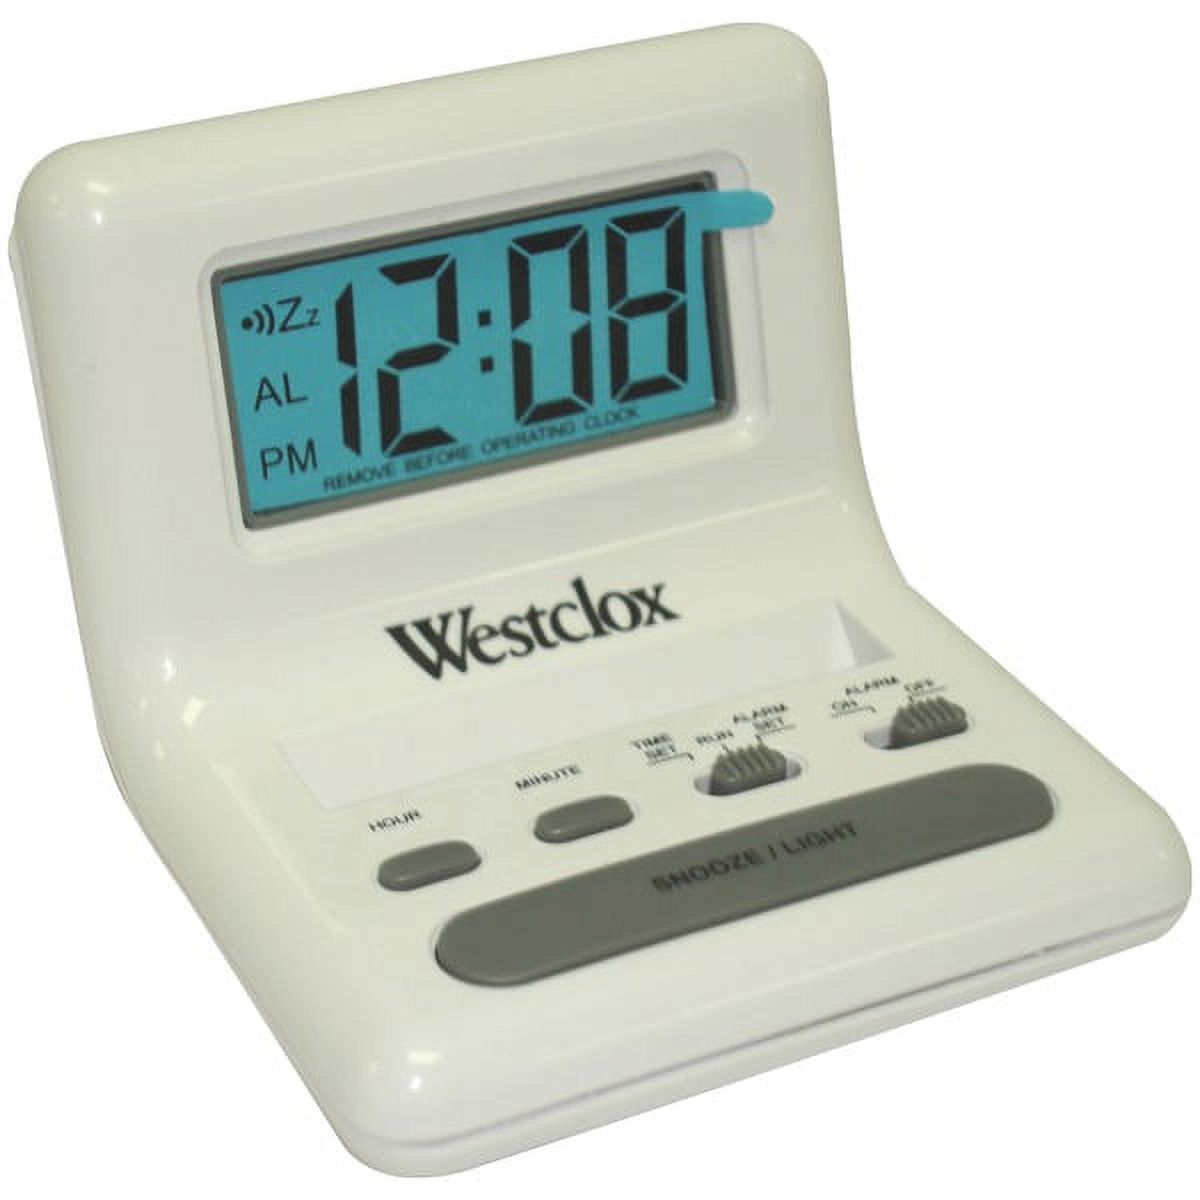 Westclox Blue LCD Alarm Clock, 47539A - image 1 of 4